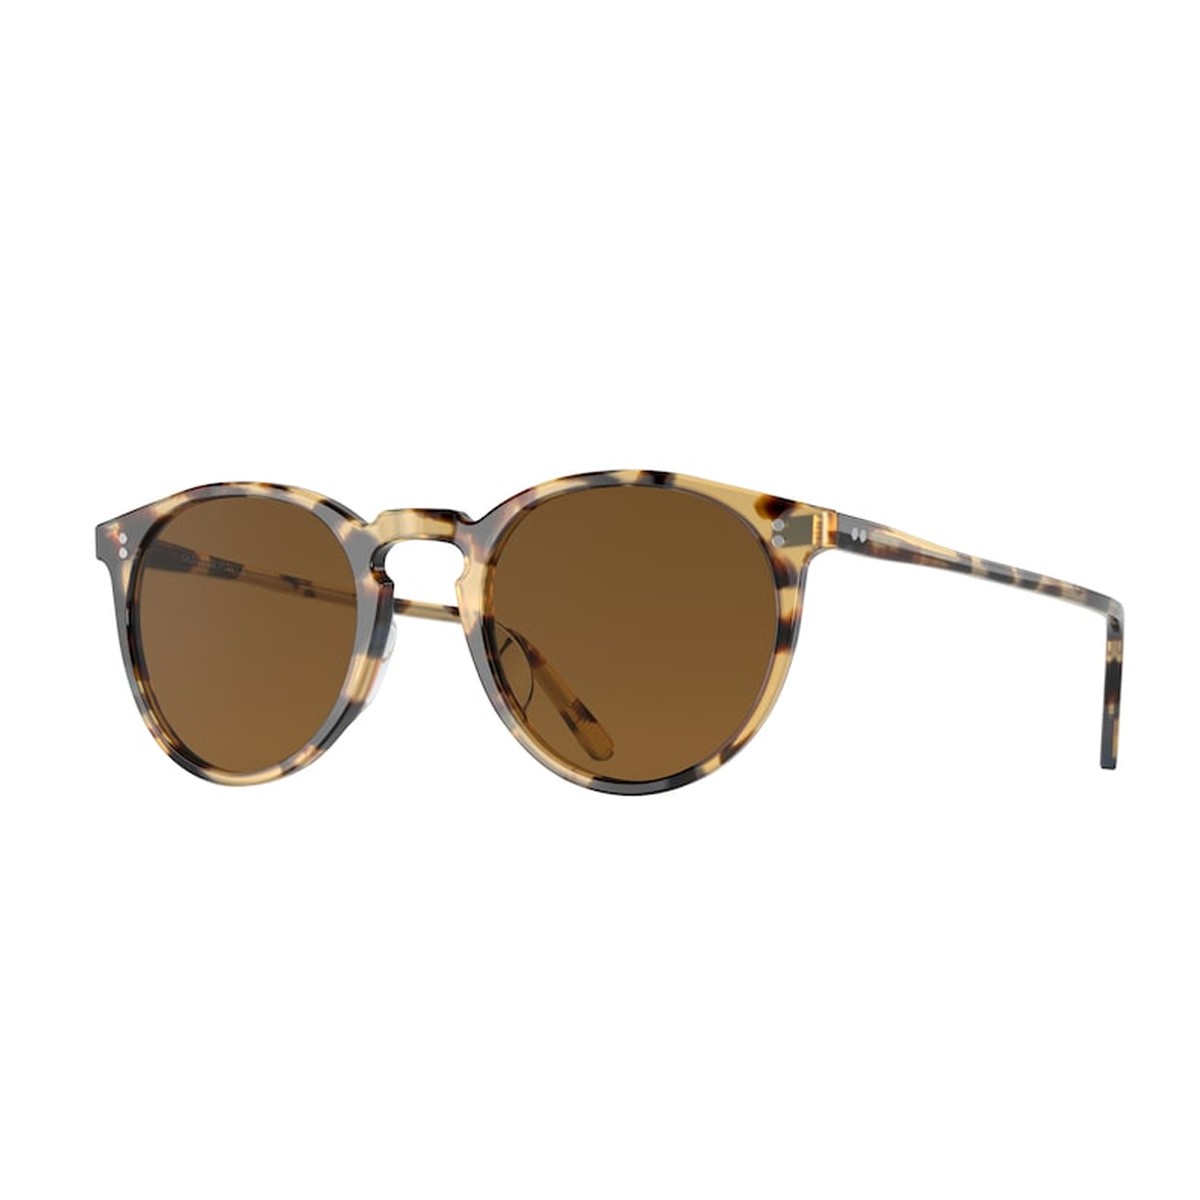 Oliver Peoples OV5183S | Men's sunglasses